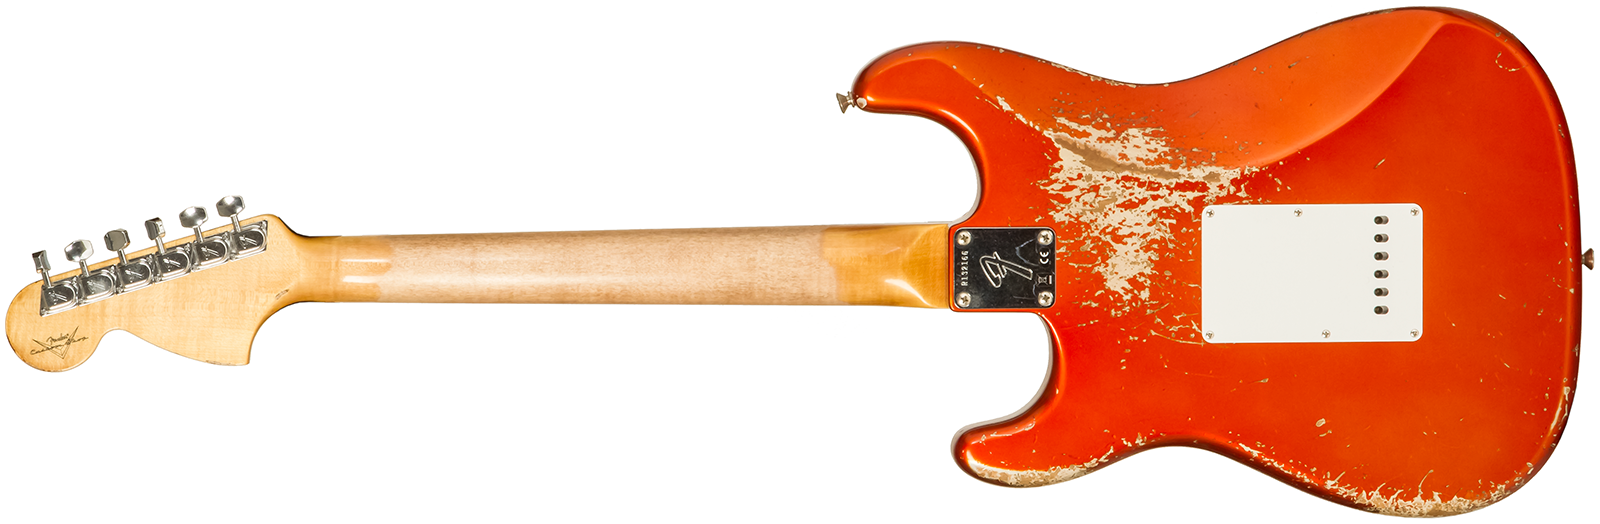 Fender Custom Shop Strat 1969 3s Trem Rw #r132166 - Heavy Relic Candy Tangerine - Guitare Électrique Forme Str - Variation 1